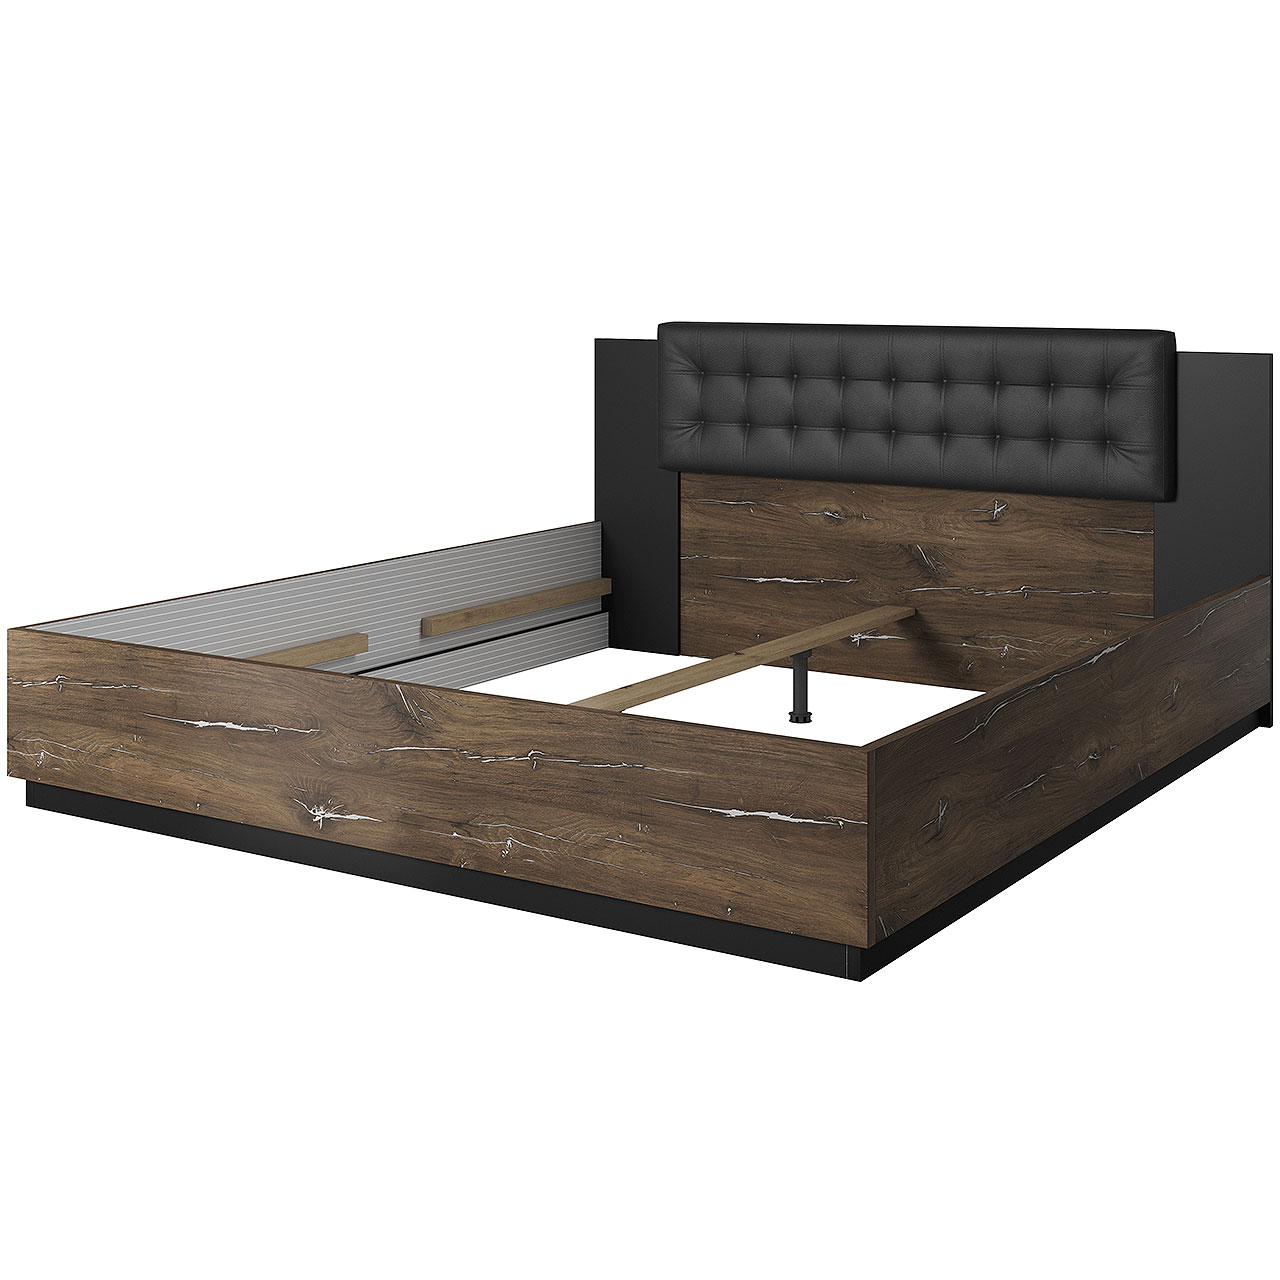 Bed 180x200 SIGMA SG32 oak flagstaf steel / black